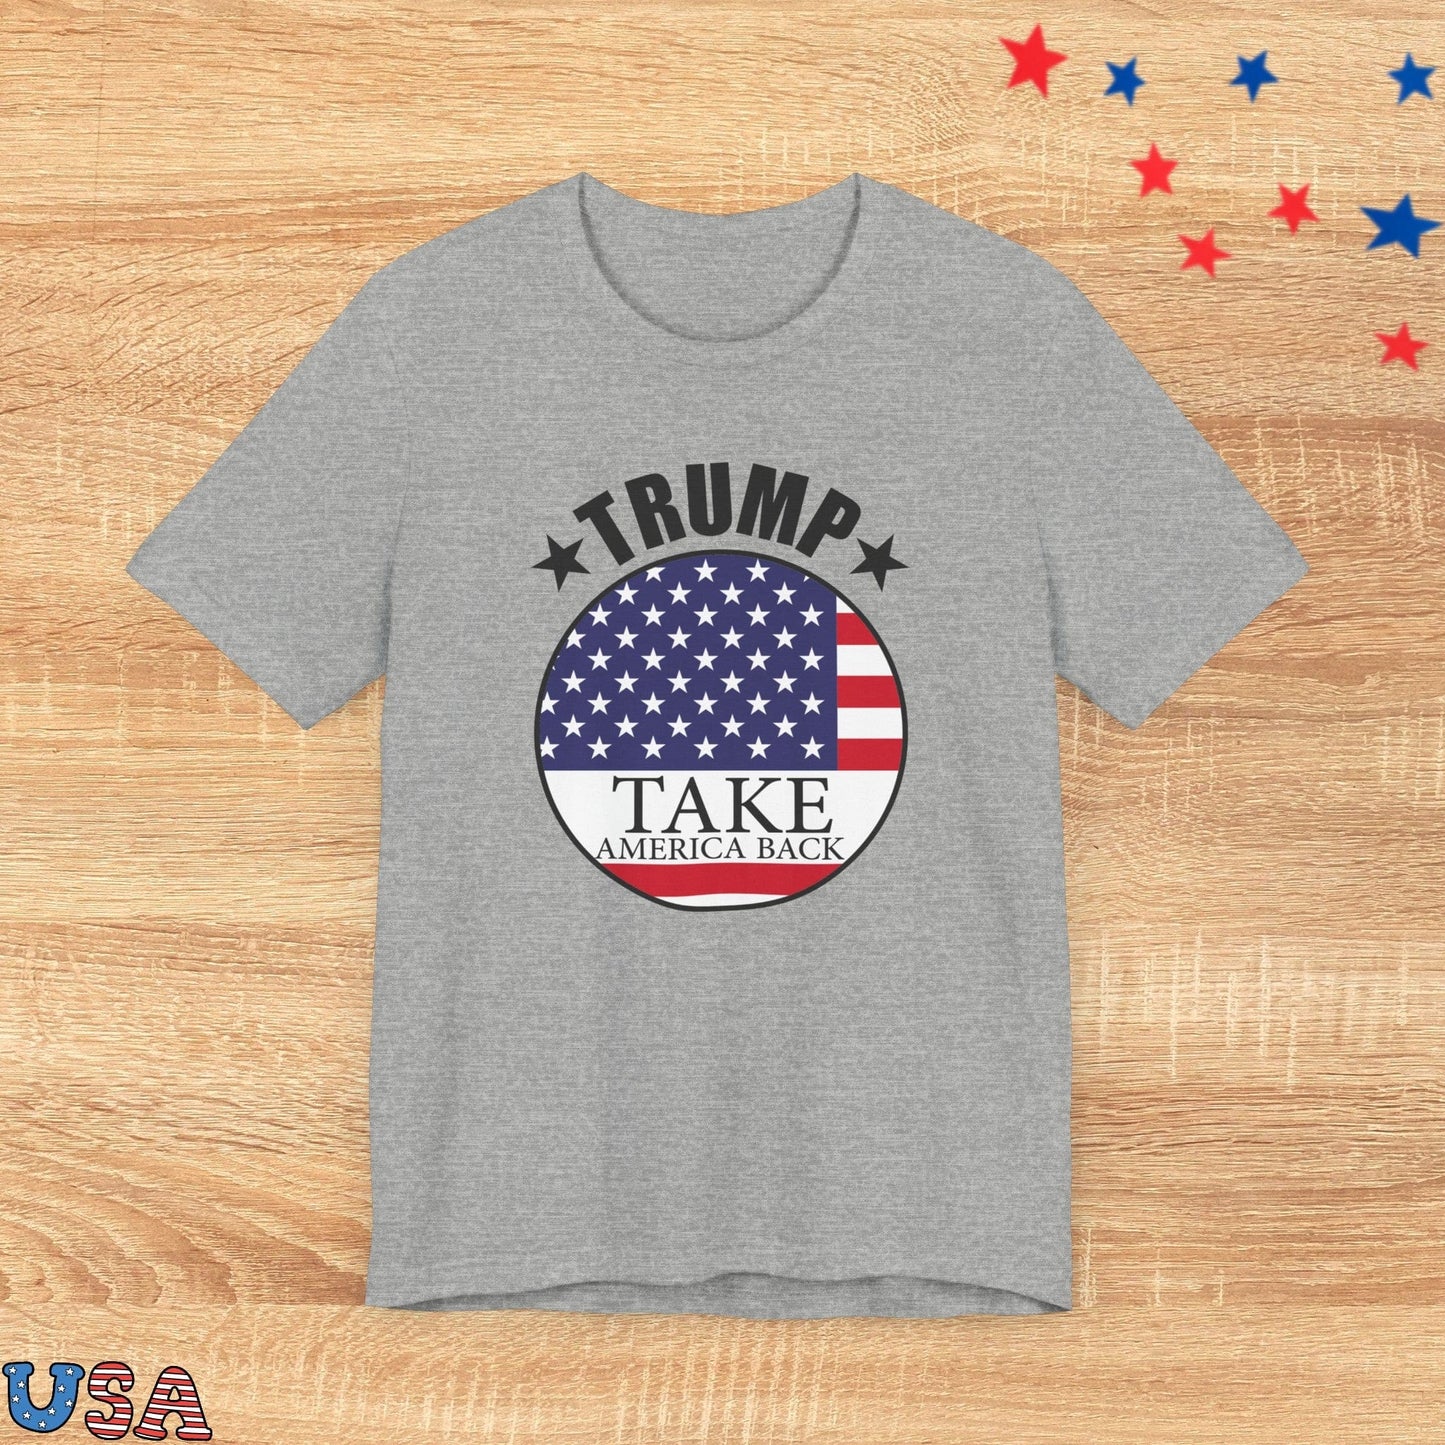 patriotic stars T-Shirt Athletic Heather / XS Trump Take America Back